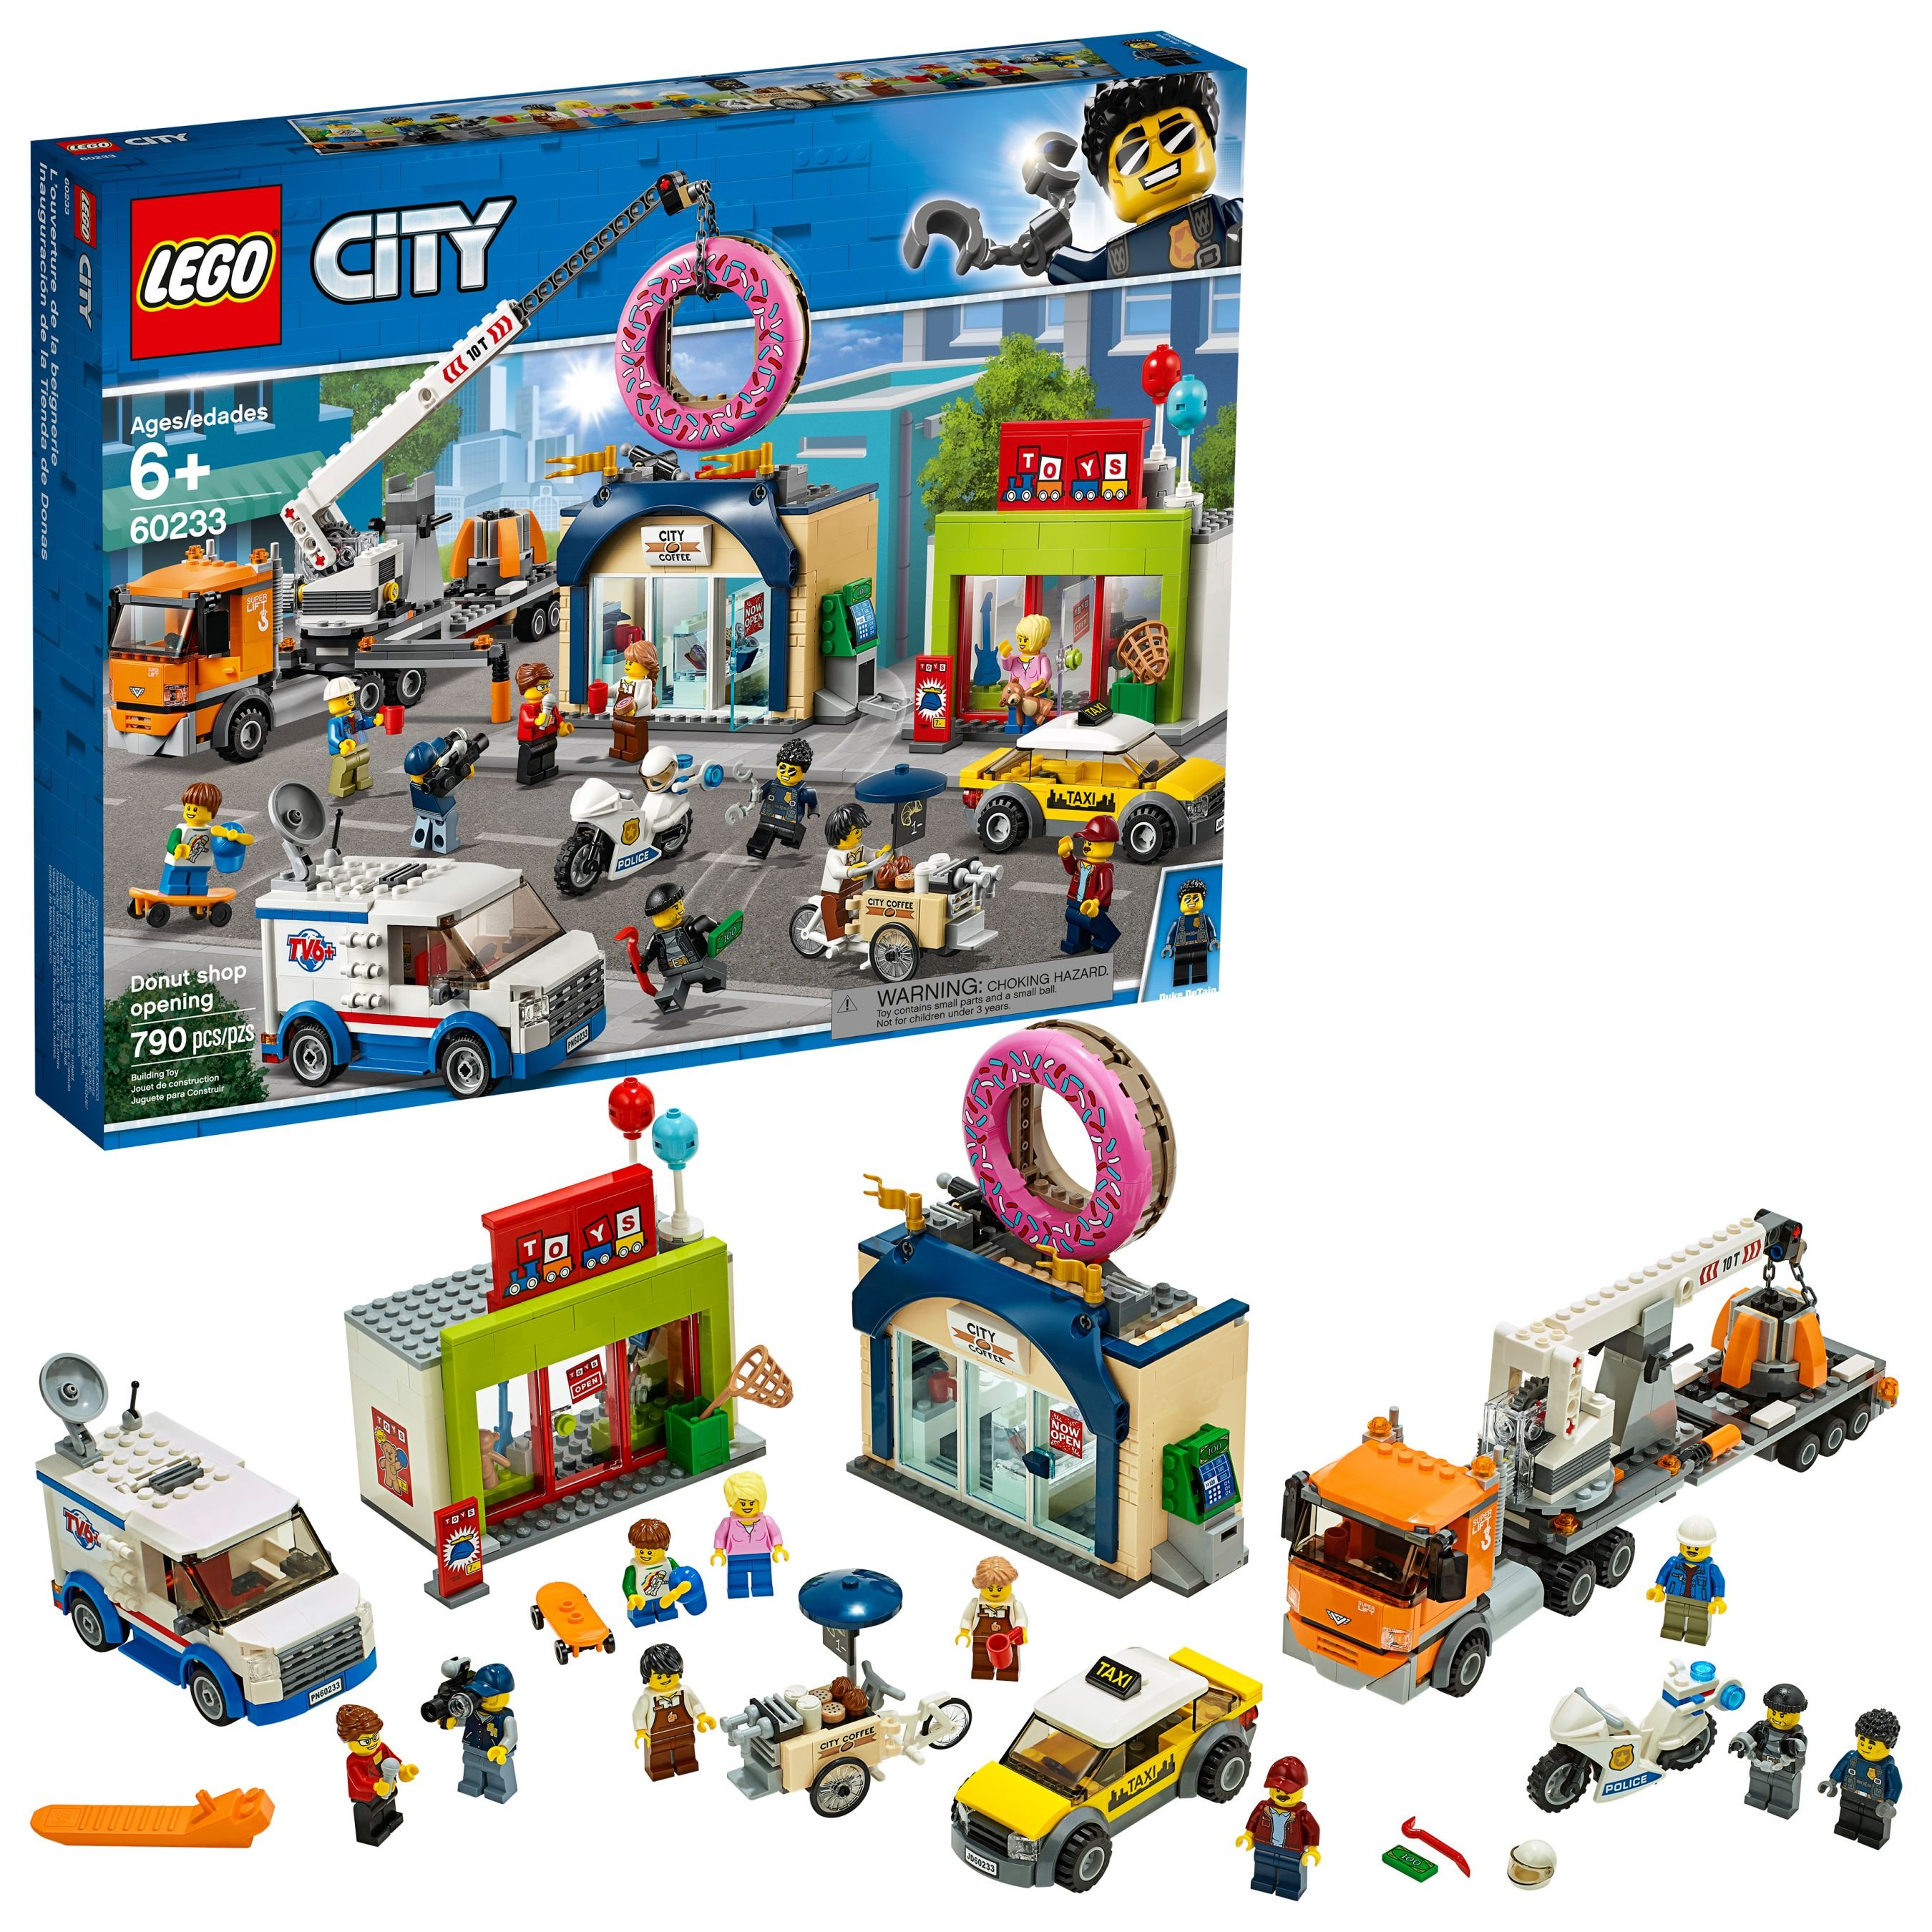 LEGO 60233 Donut-Shop-Eröffnung Große Bausatz